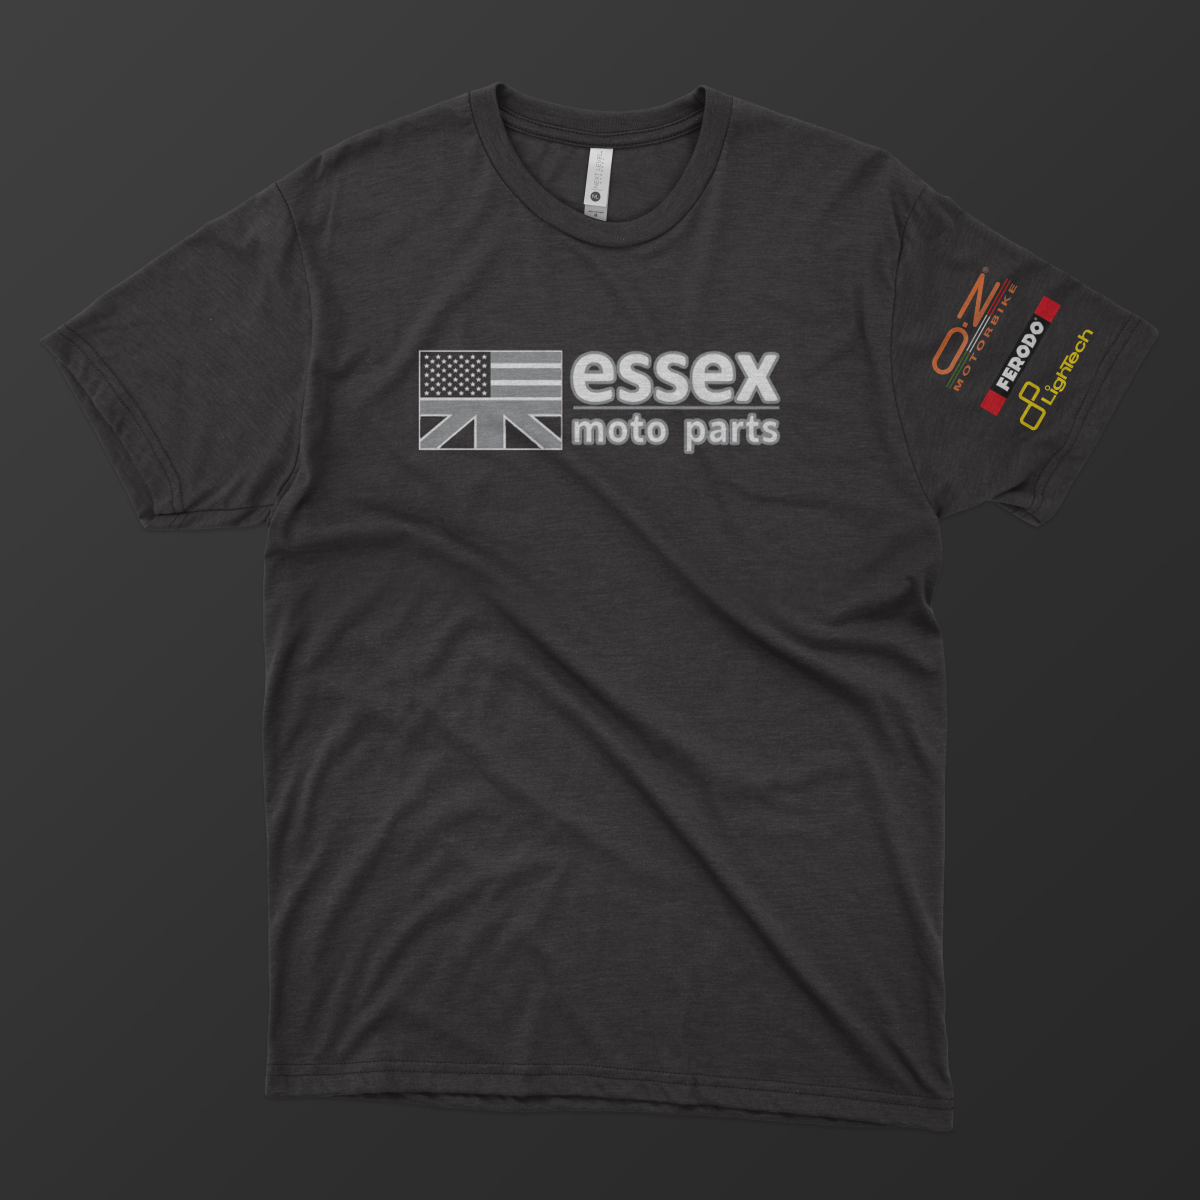 essexshirt.png